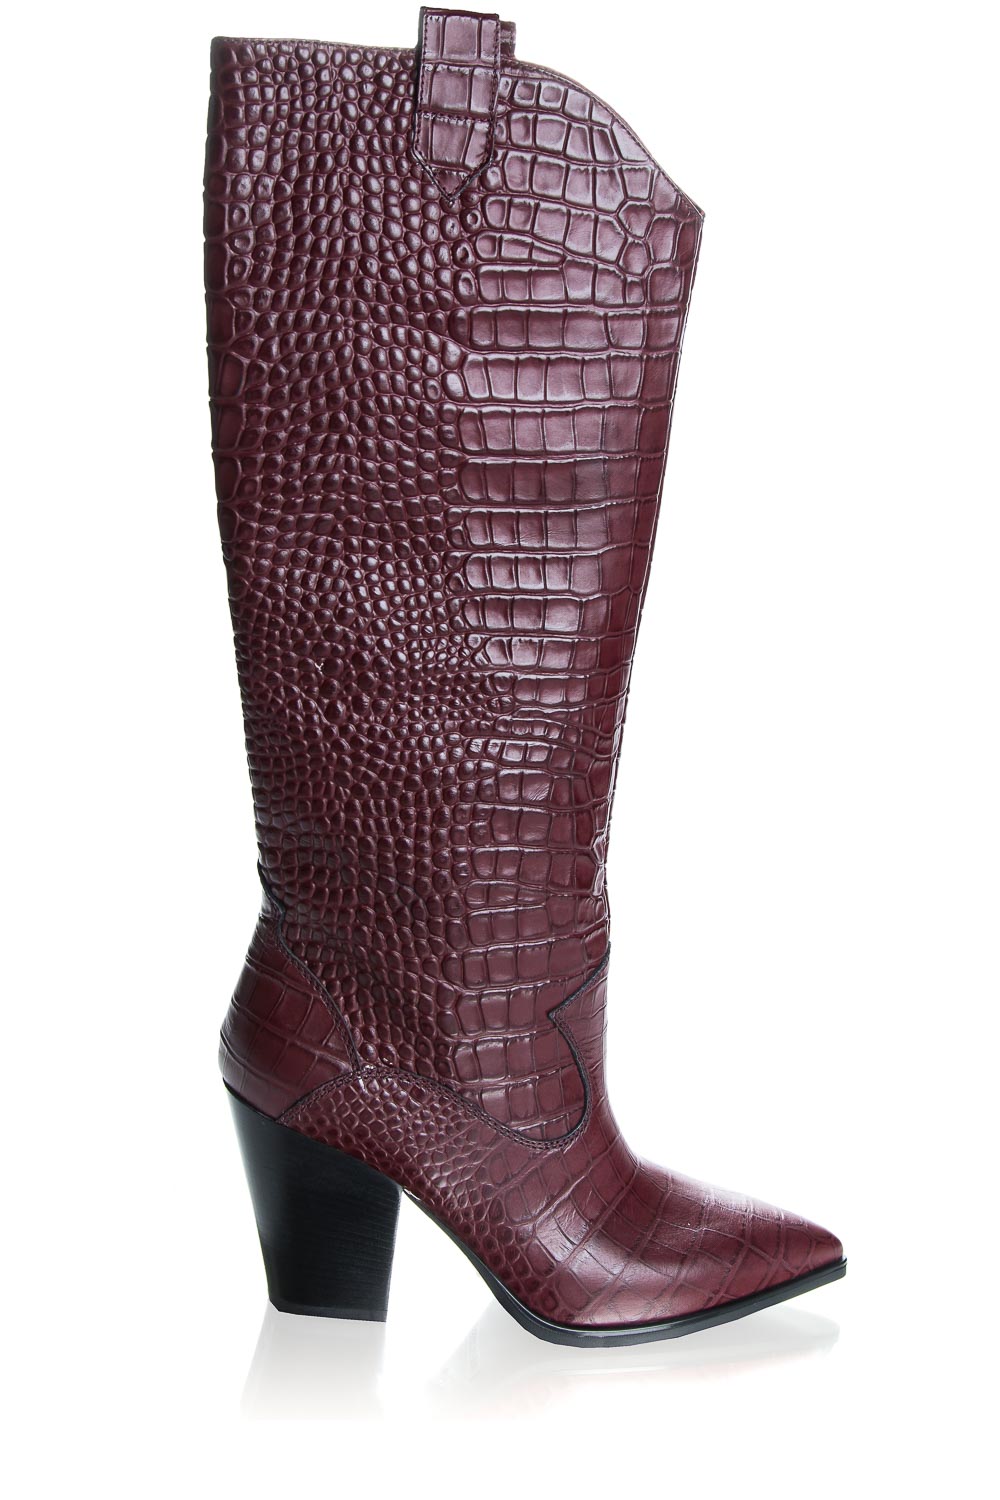 crocodile pattern boots